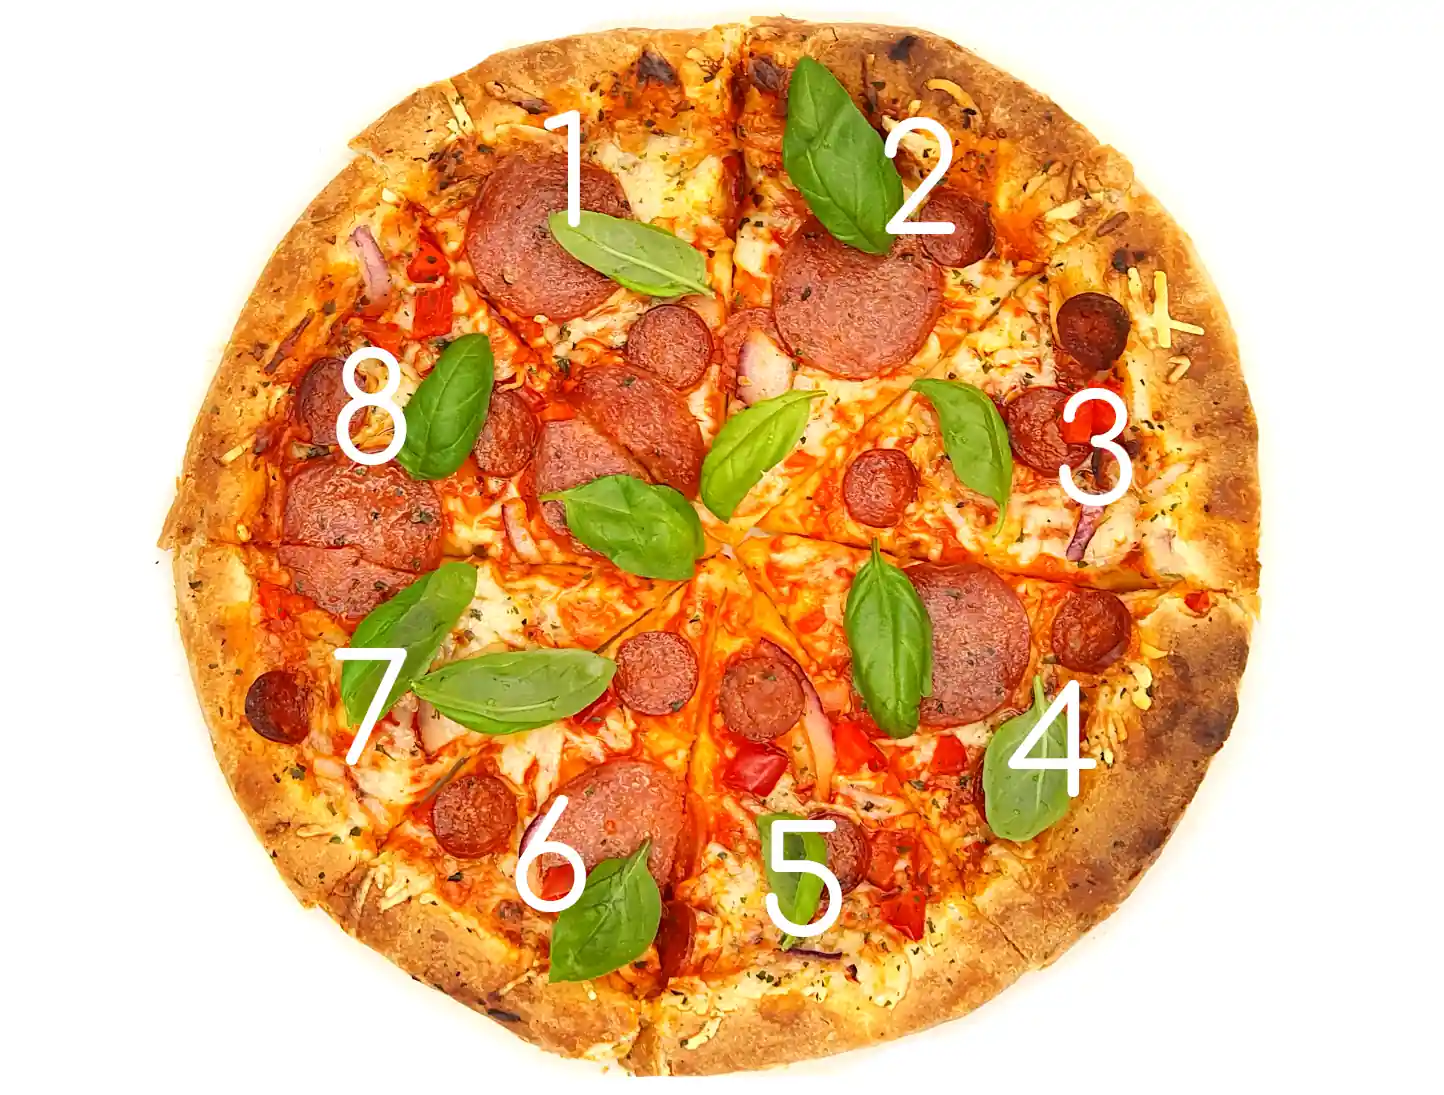 14 inch pizza sliced in 8 slices